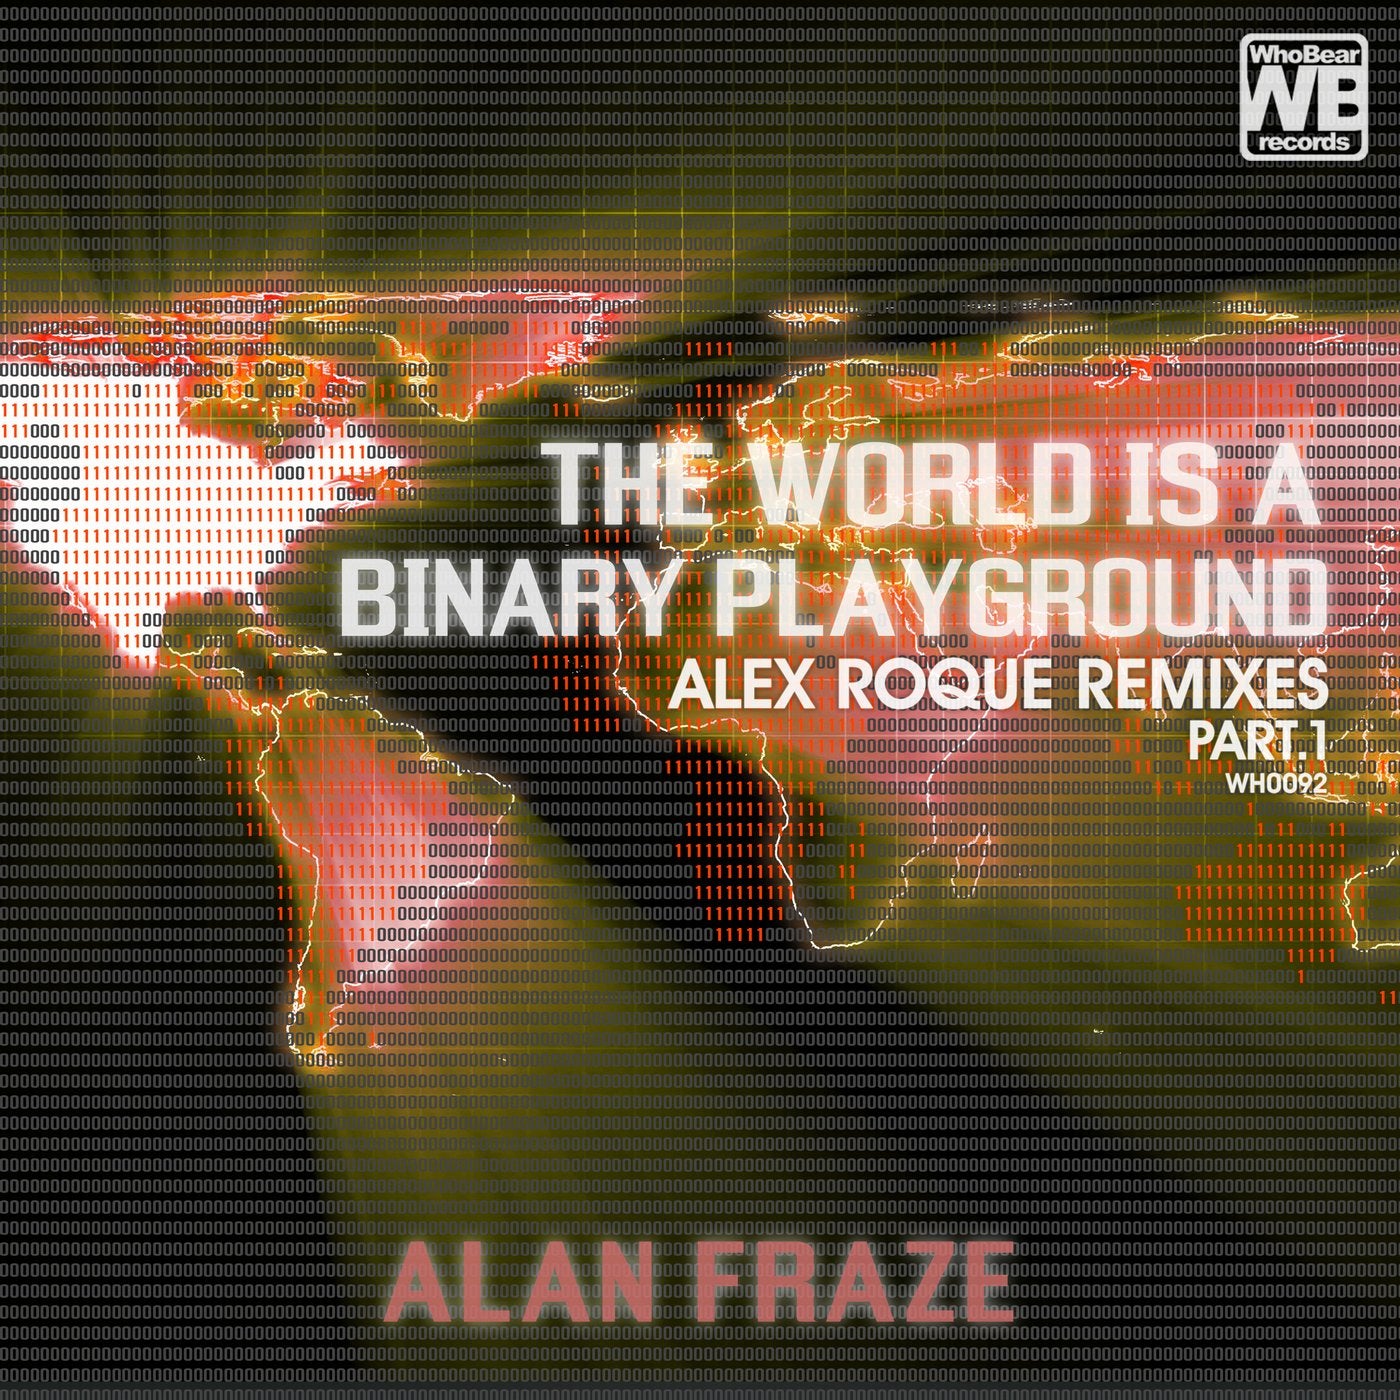 The World Is a Binary Playground (Alex Roque Remixes Part 1)